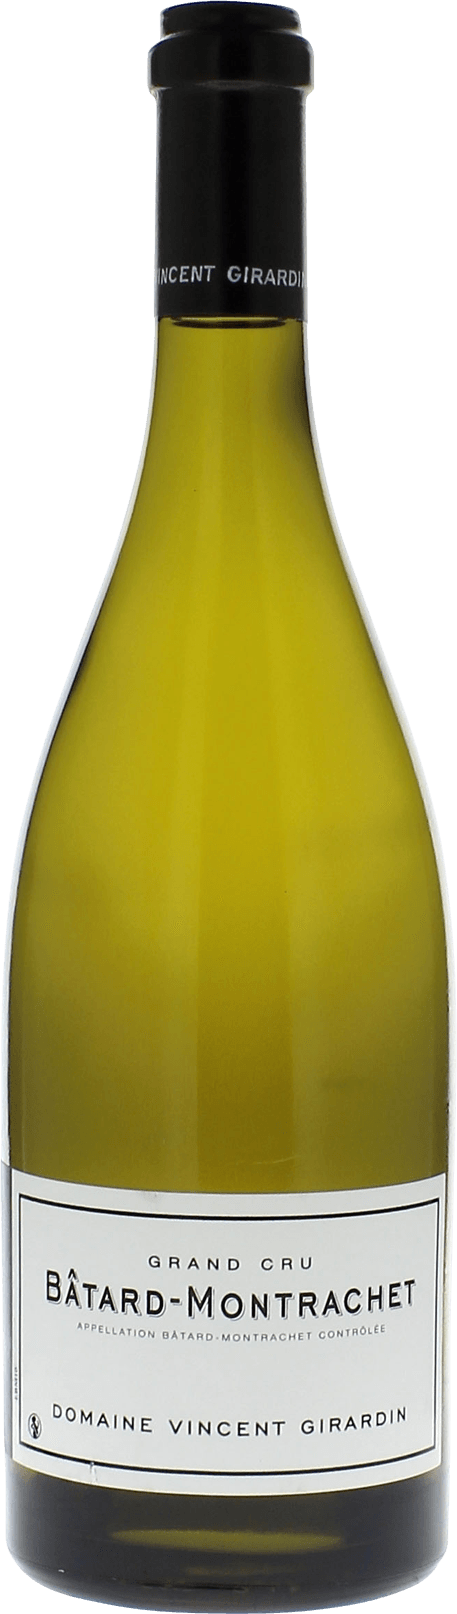 Batard montrachet grand cru 2014 Domaine GIRARDIN Vincent, Bourgogne blanc